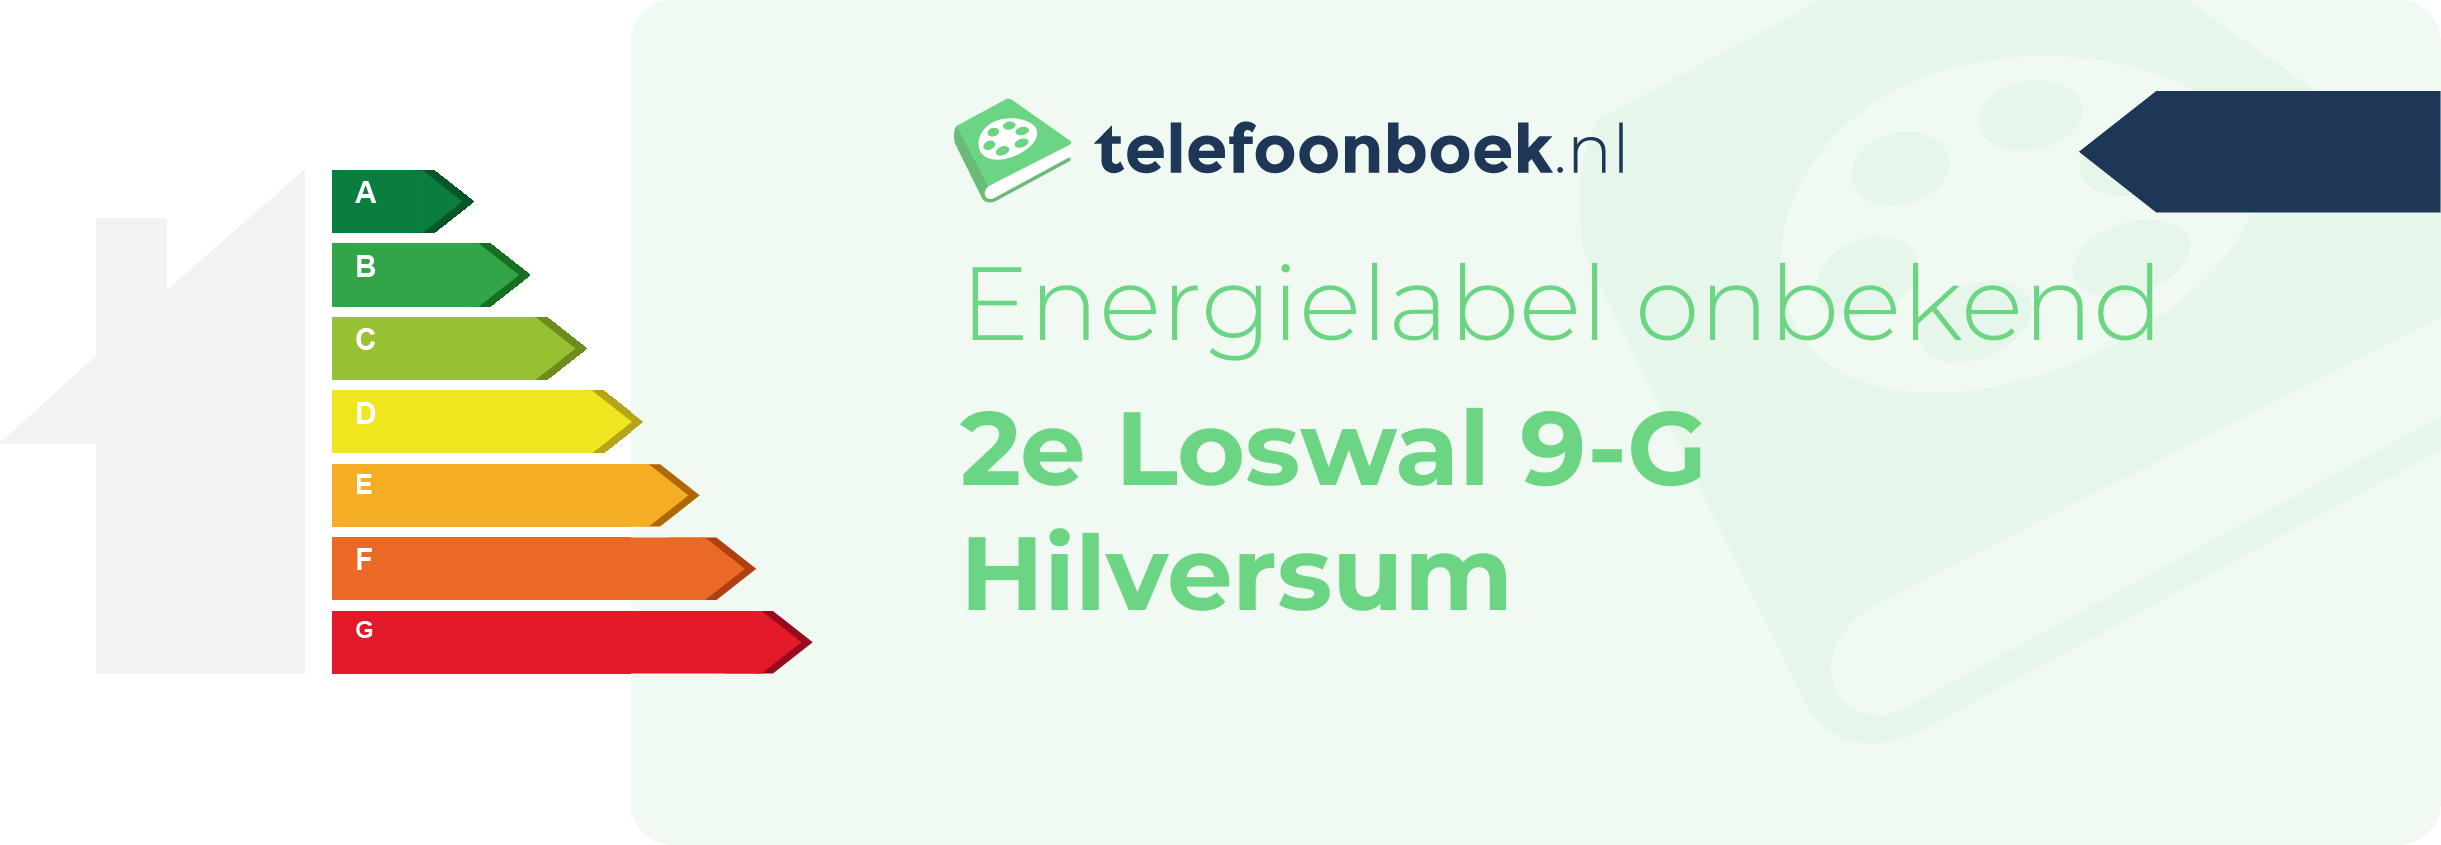 Energielabel 2e Loswal 9-G Hilversum